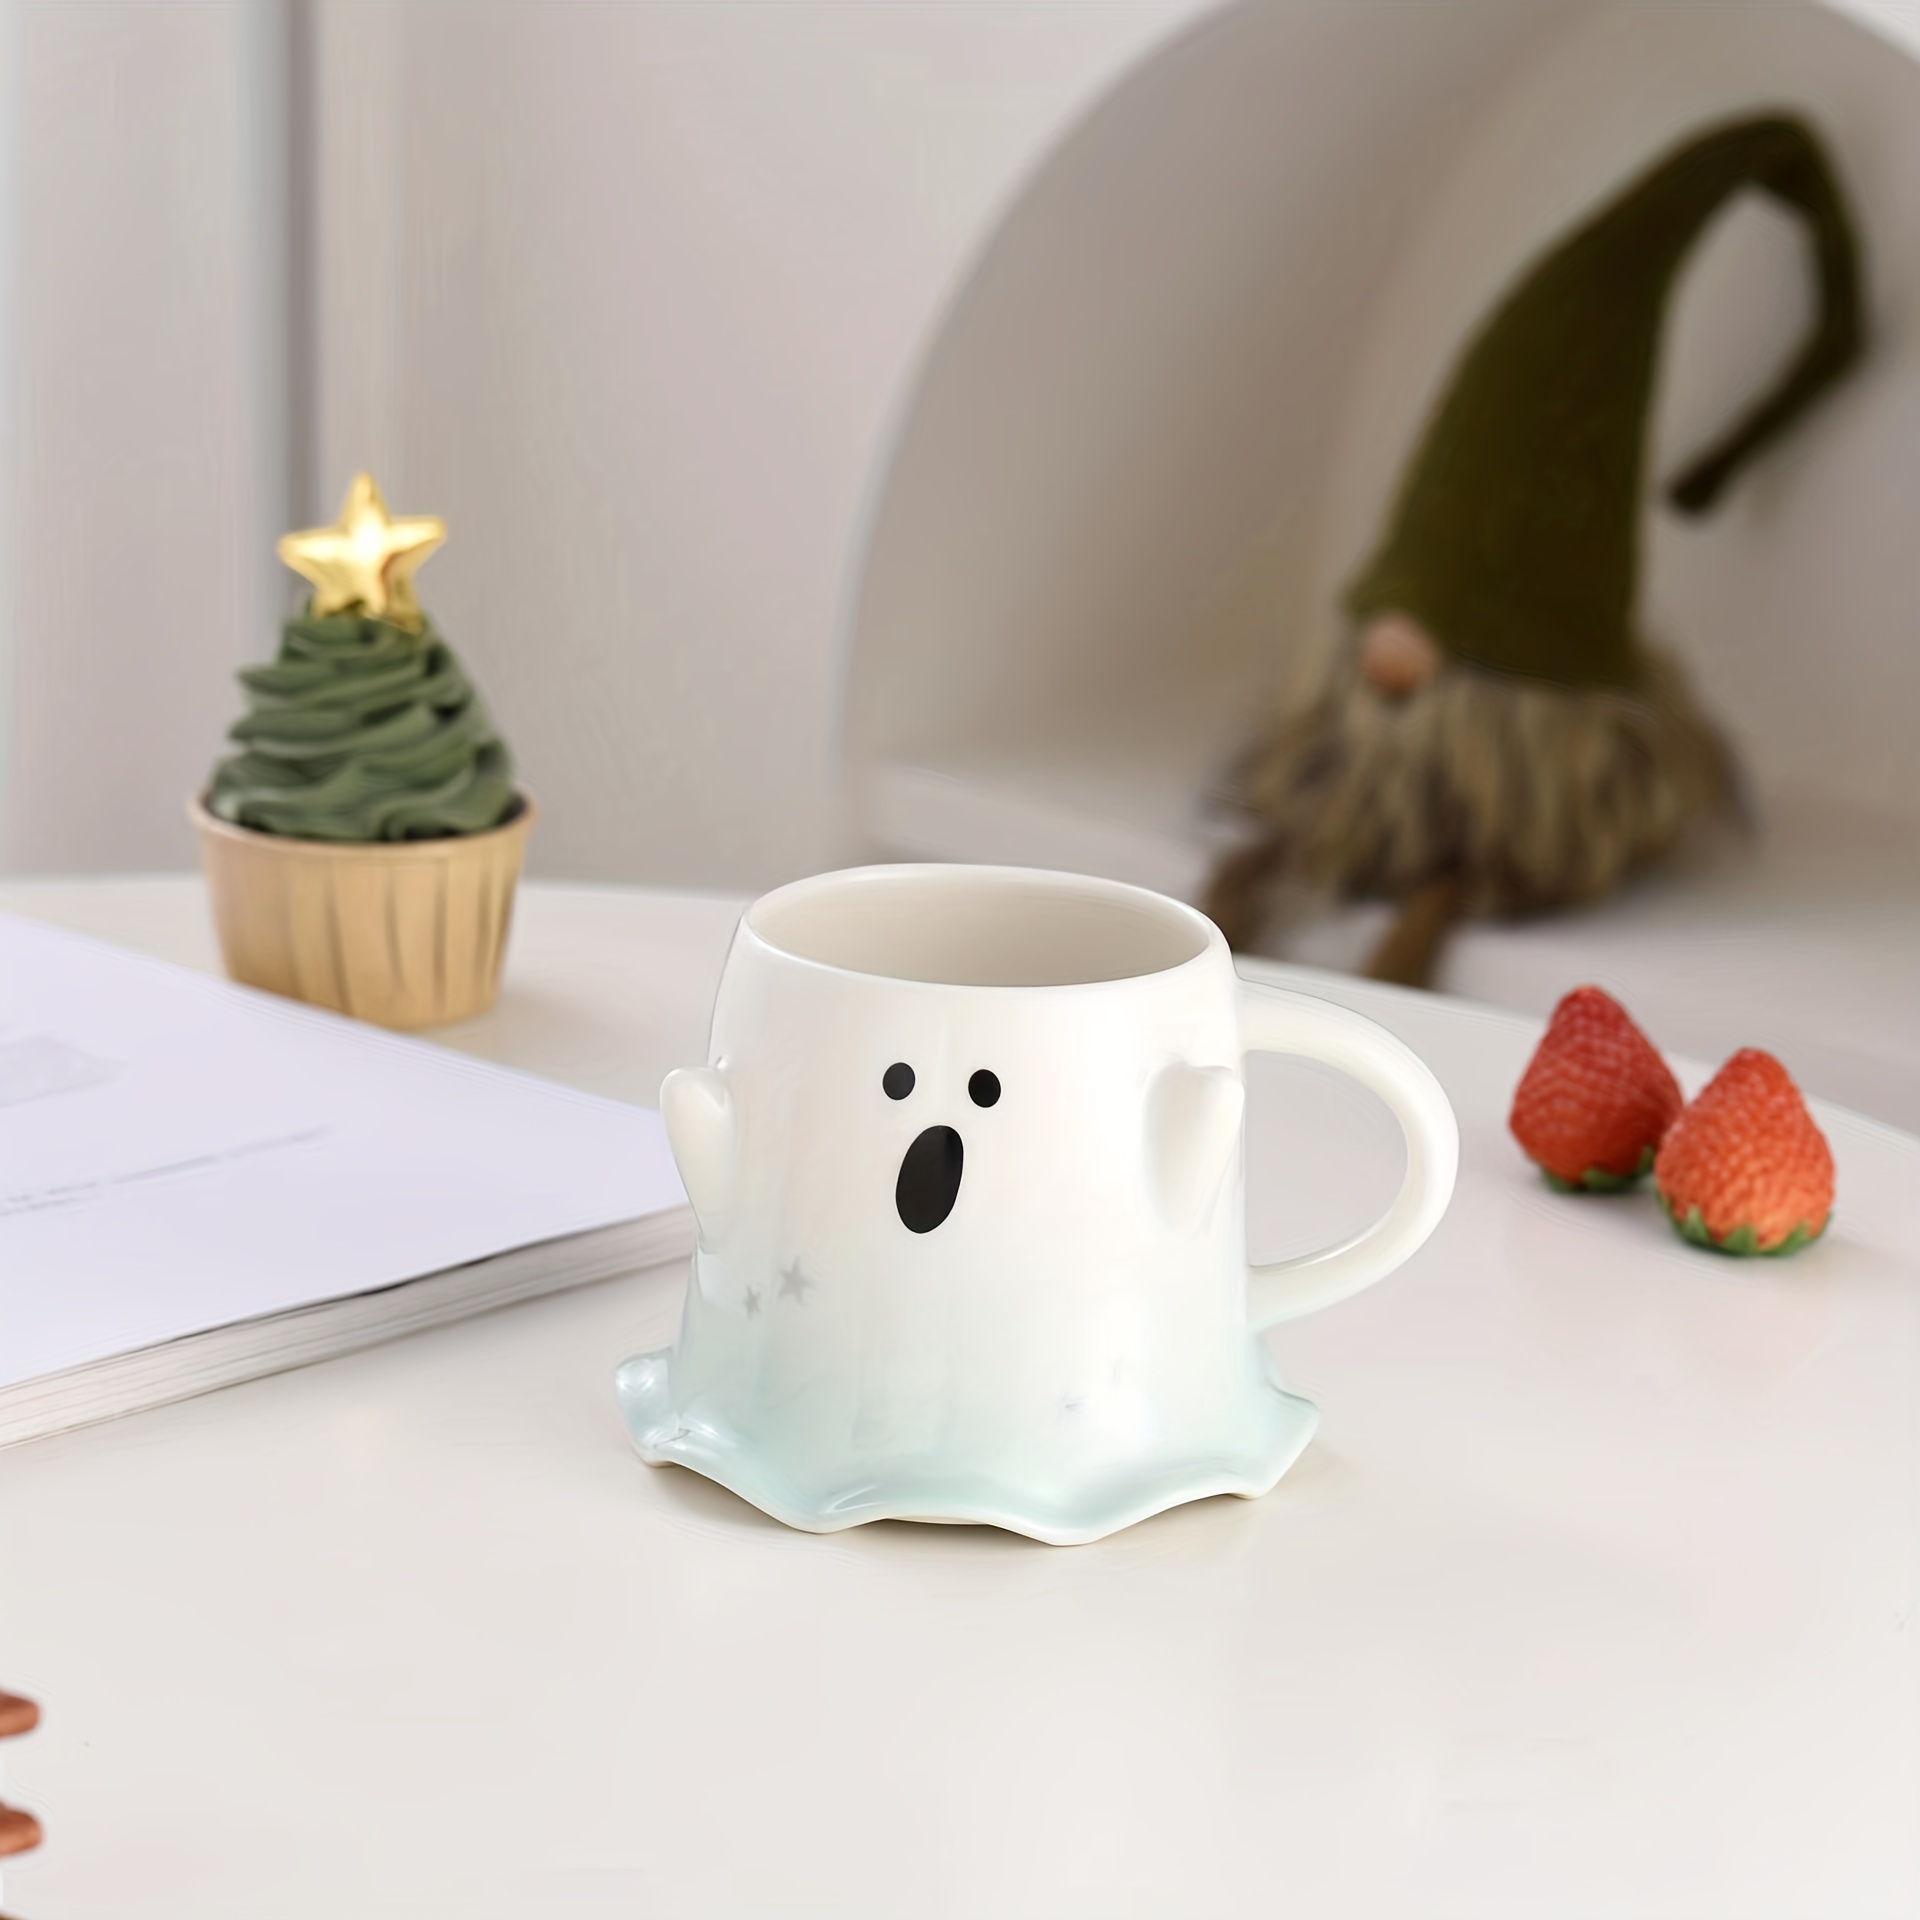 Ceramic Cup Set Cute Soft Color Unique Design for Coffee Tea - Warmly Life